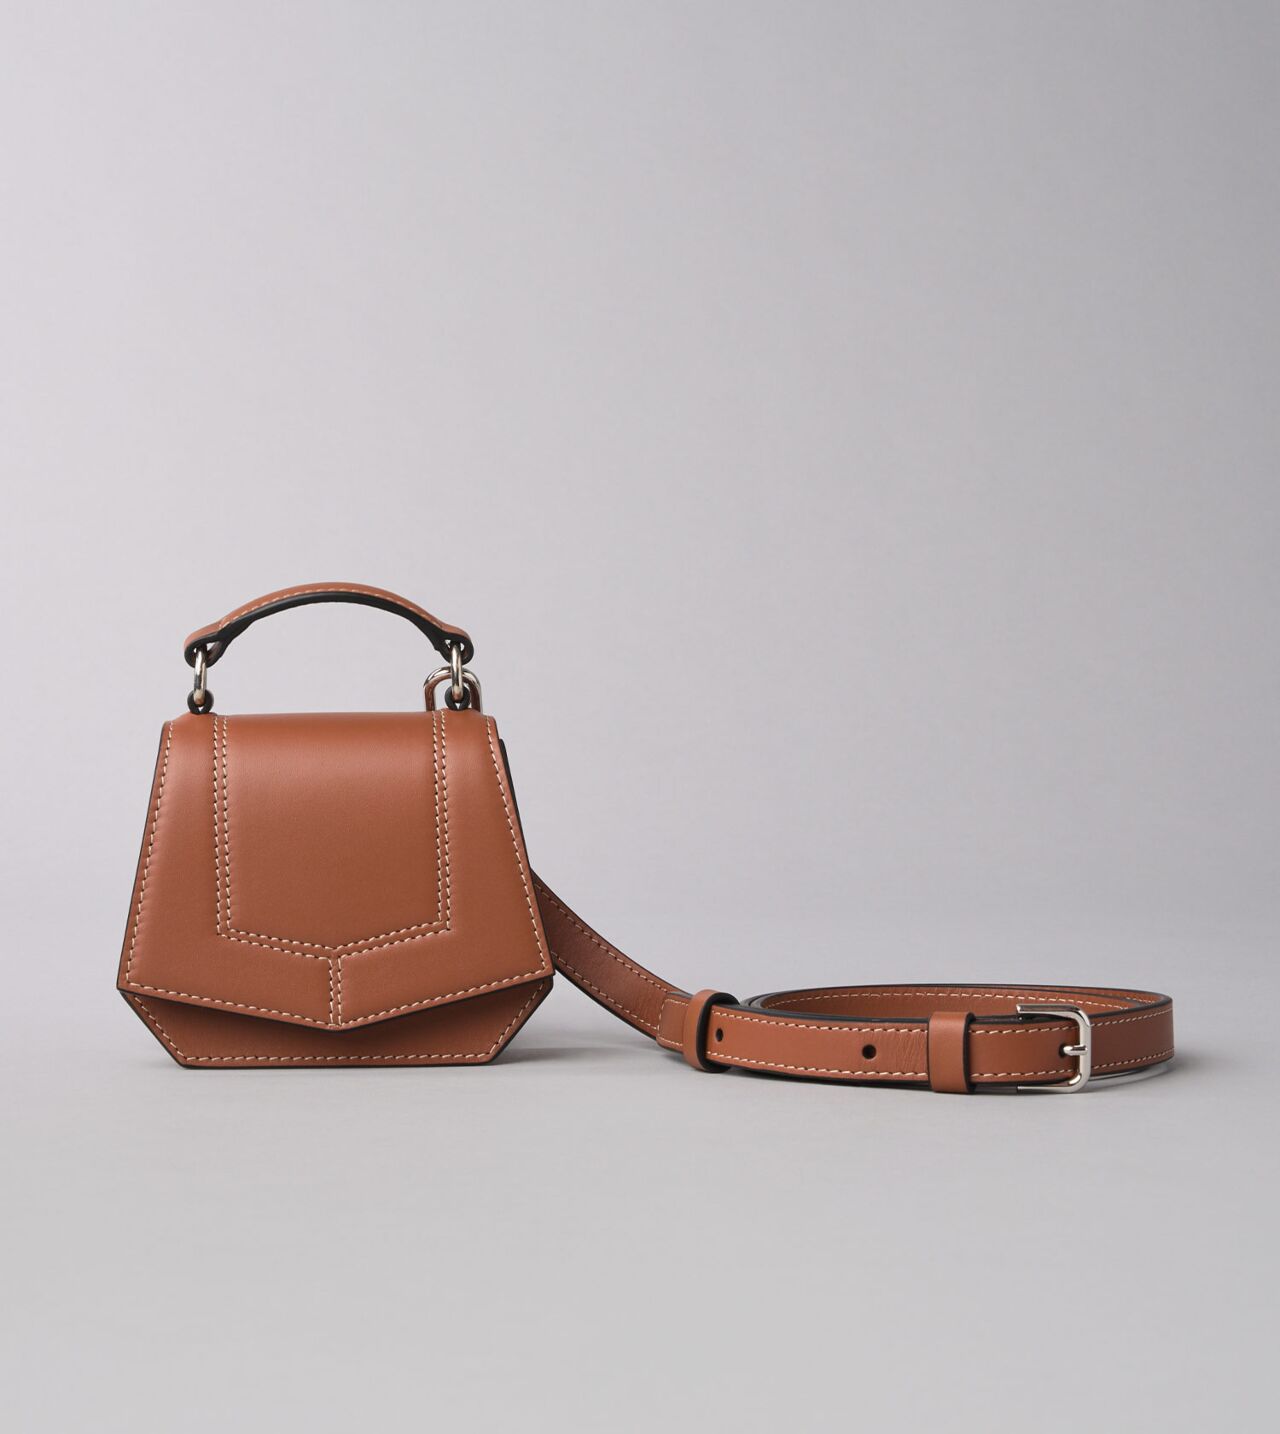 Blueprint Micro Bag in Saddle Tan Leather